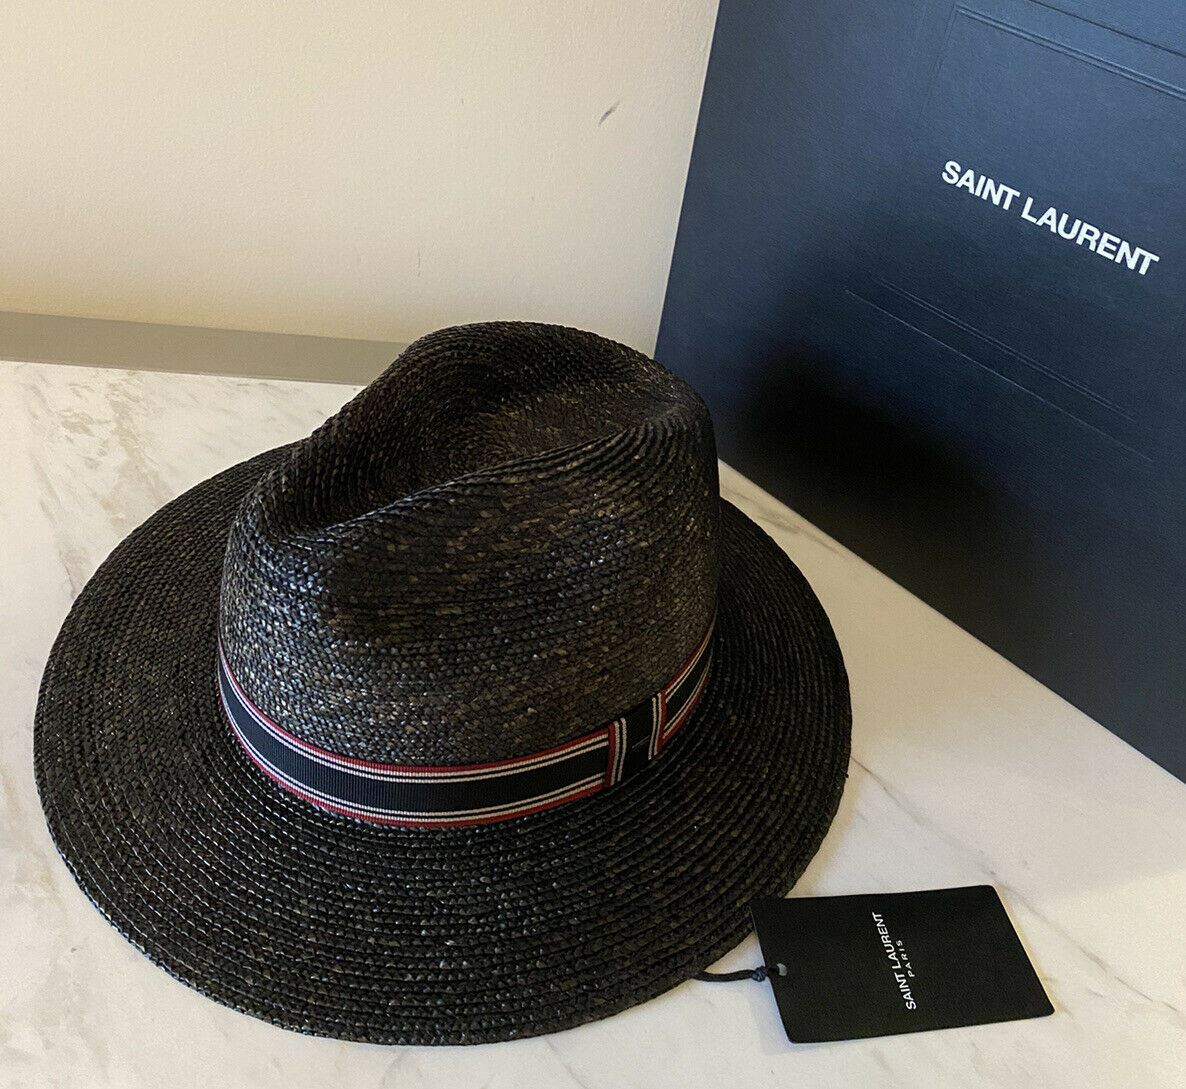 NWT $850 Saint Laurent Men’s Straw Fedora Hat Black/Silver XL Italy